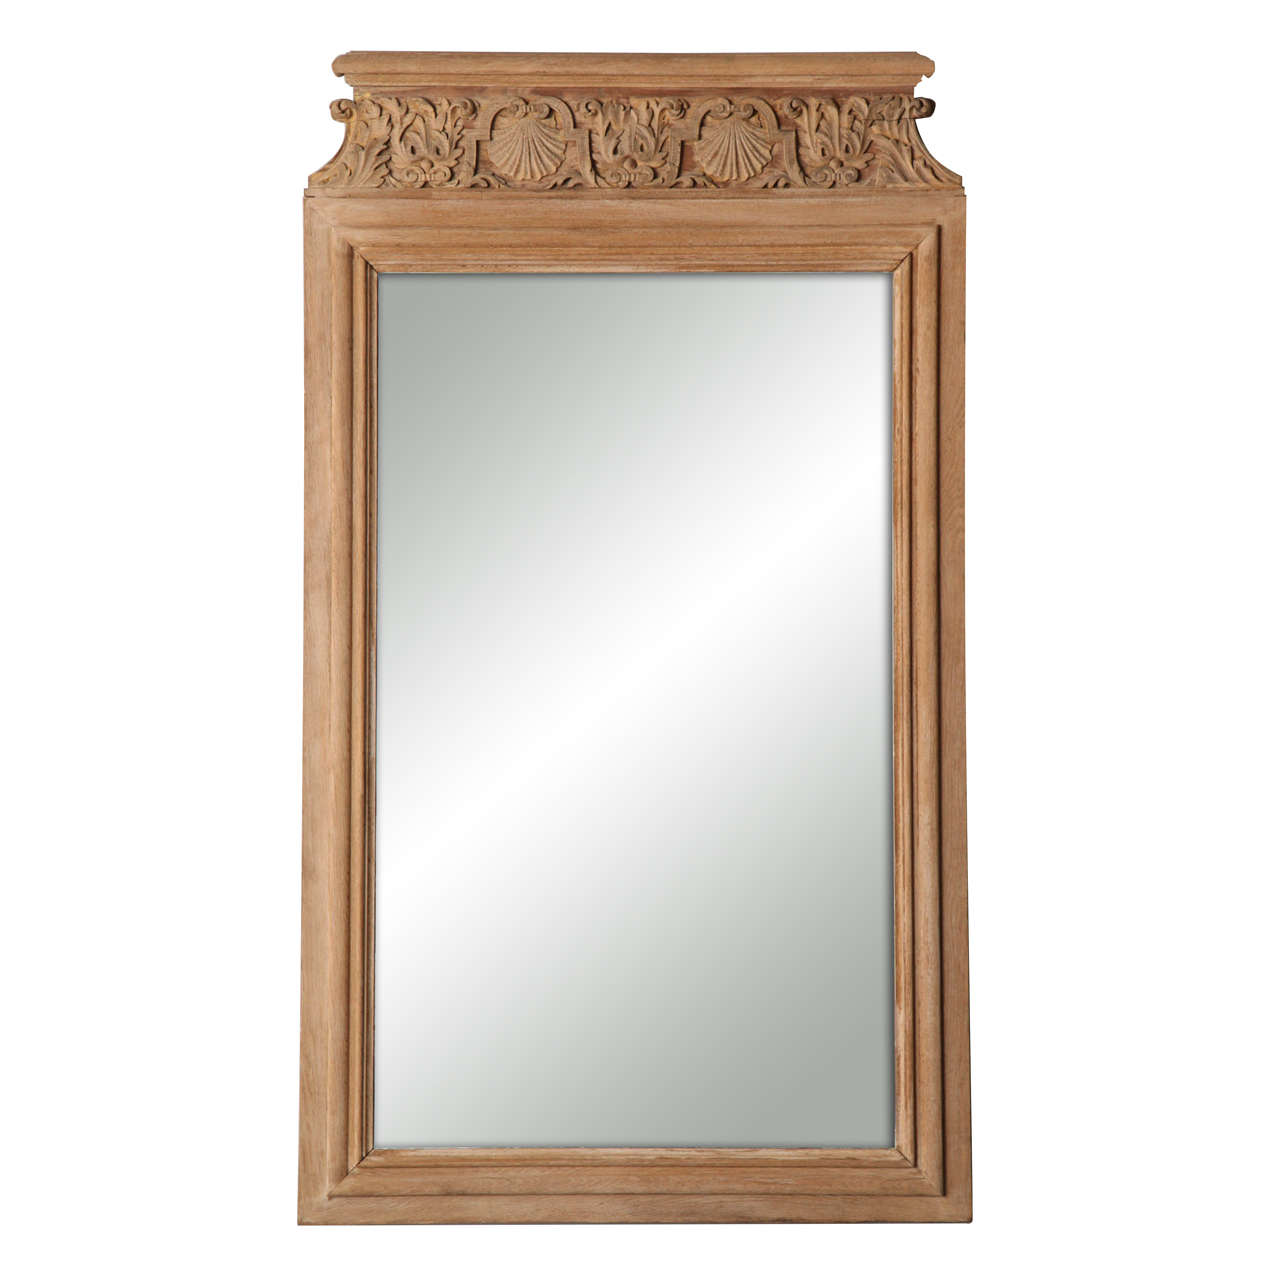 Boiserie Mirror For Sale